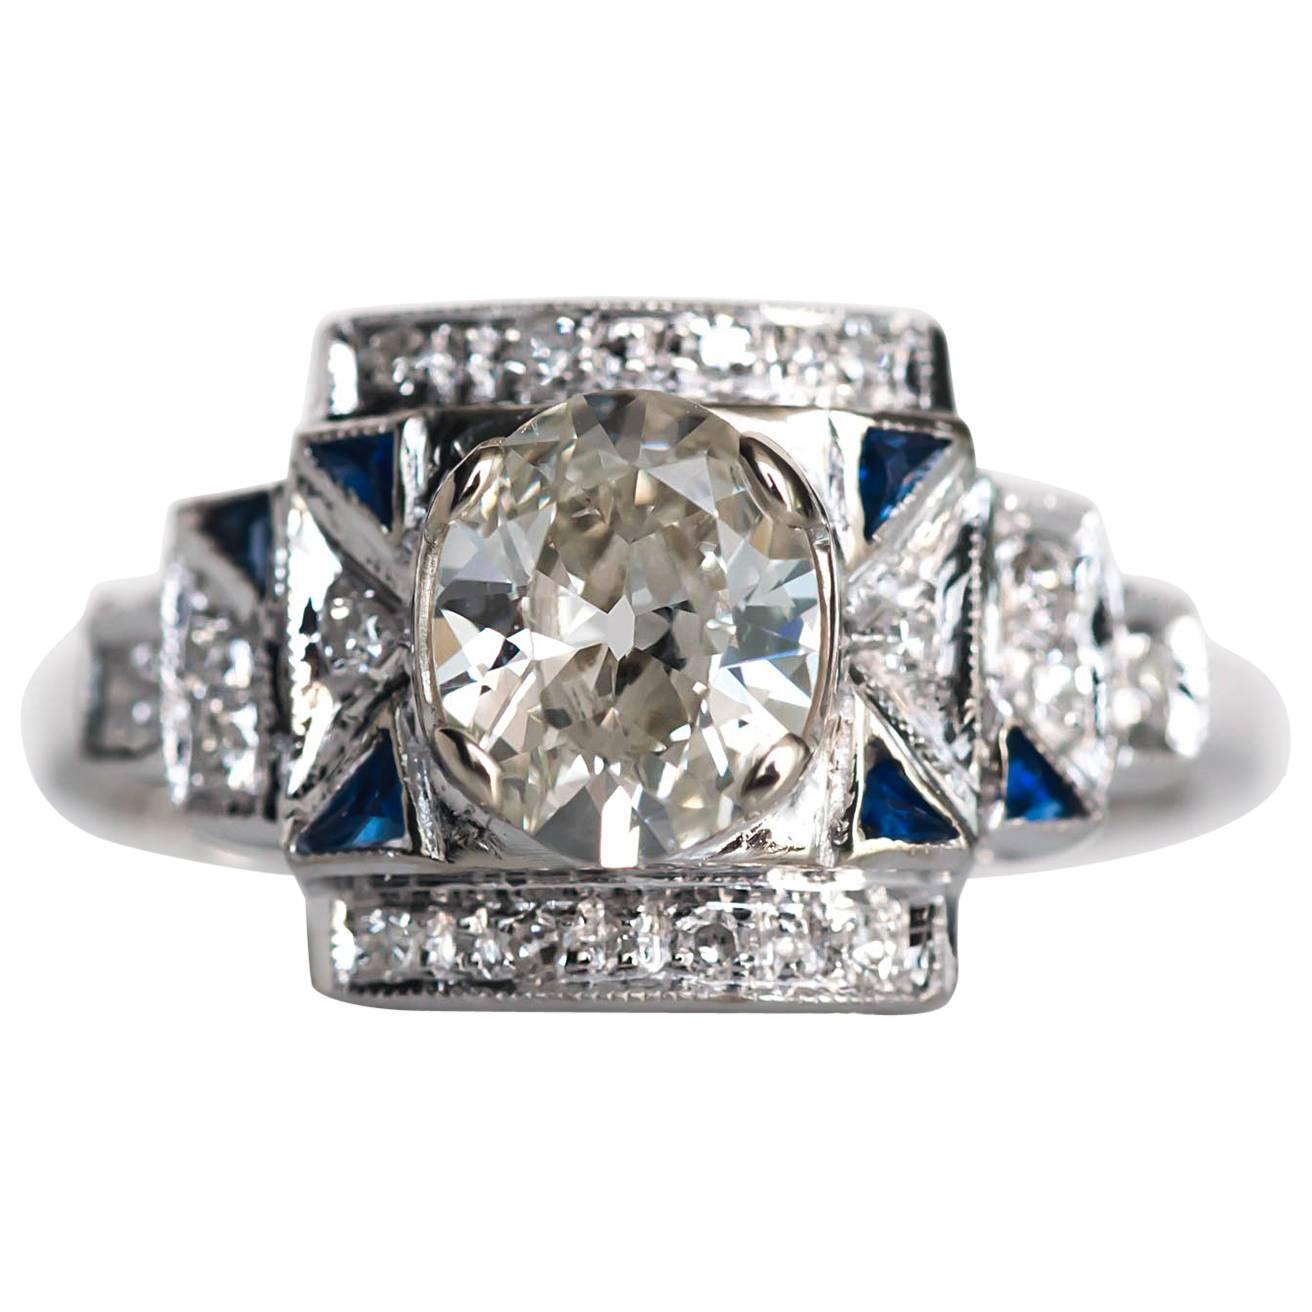 1930s Art Deco White Gold GIA Certified .88 Carat Diamond Engagement Ring